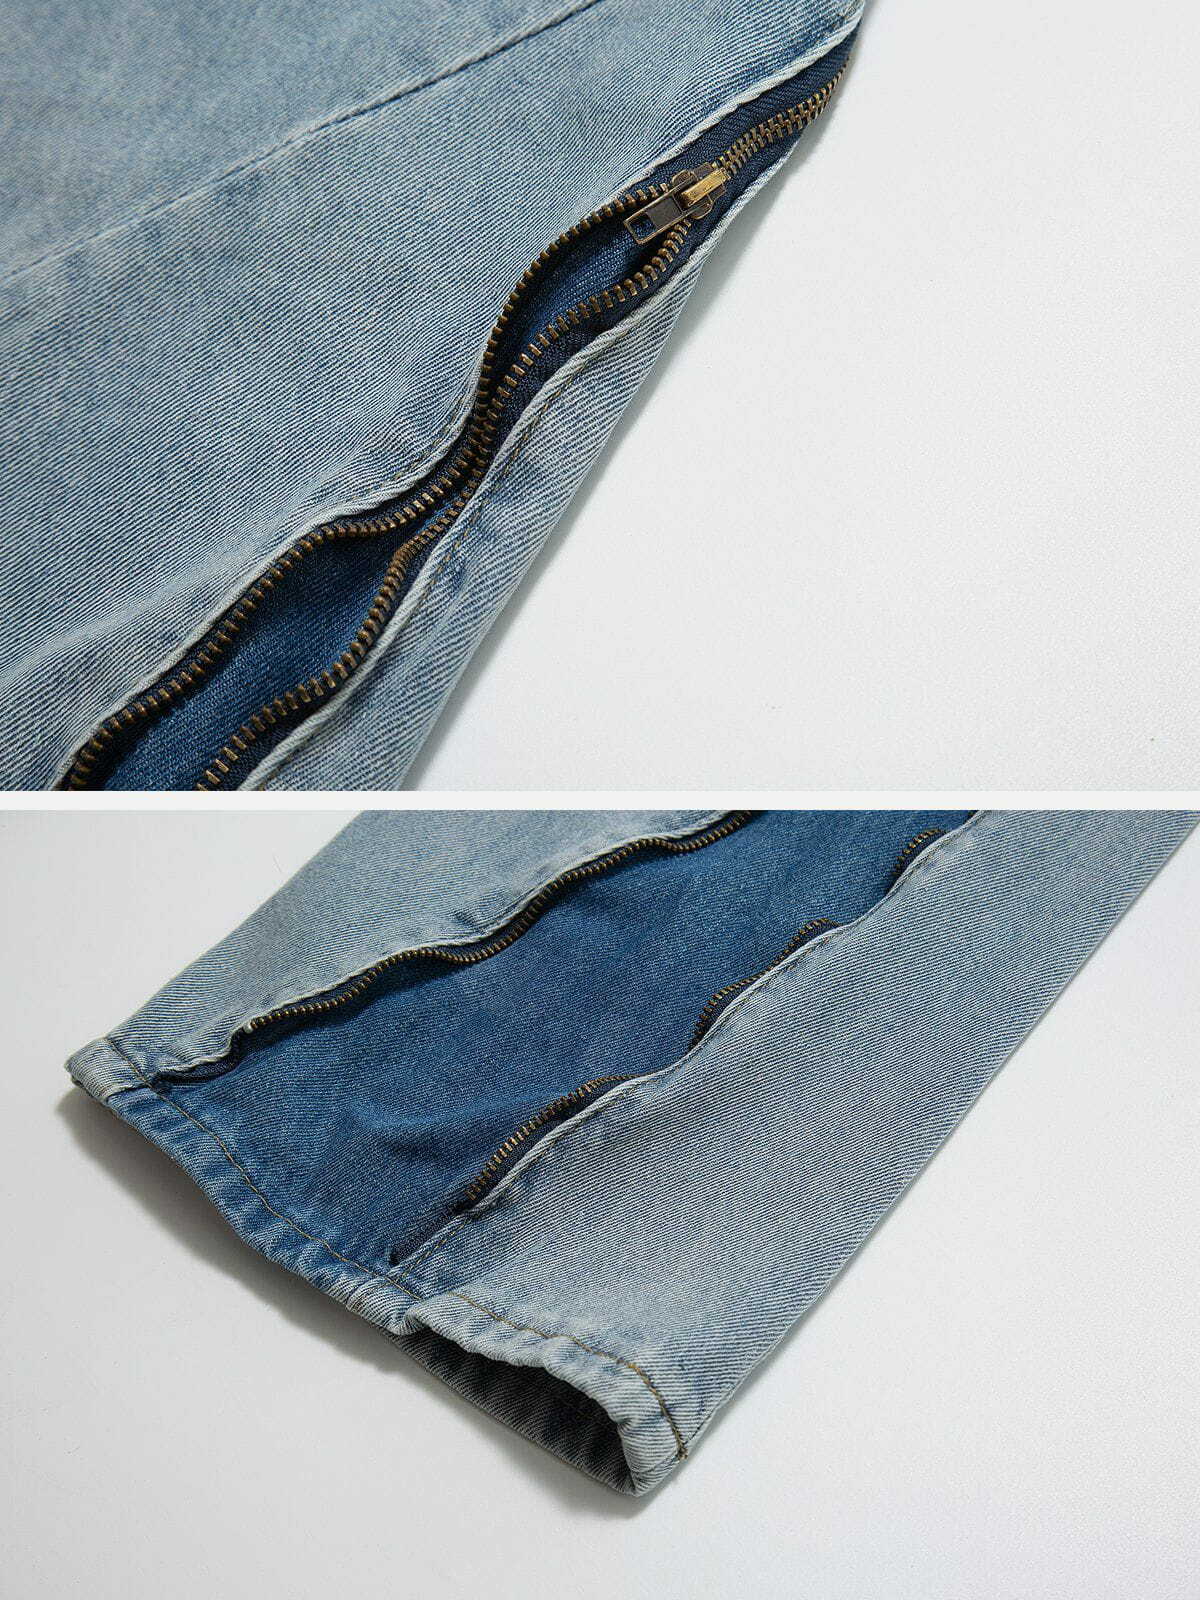 retro wash zip jeans adjustable fit & vintage vibes 1847